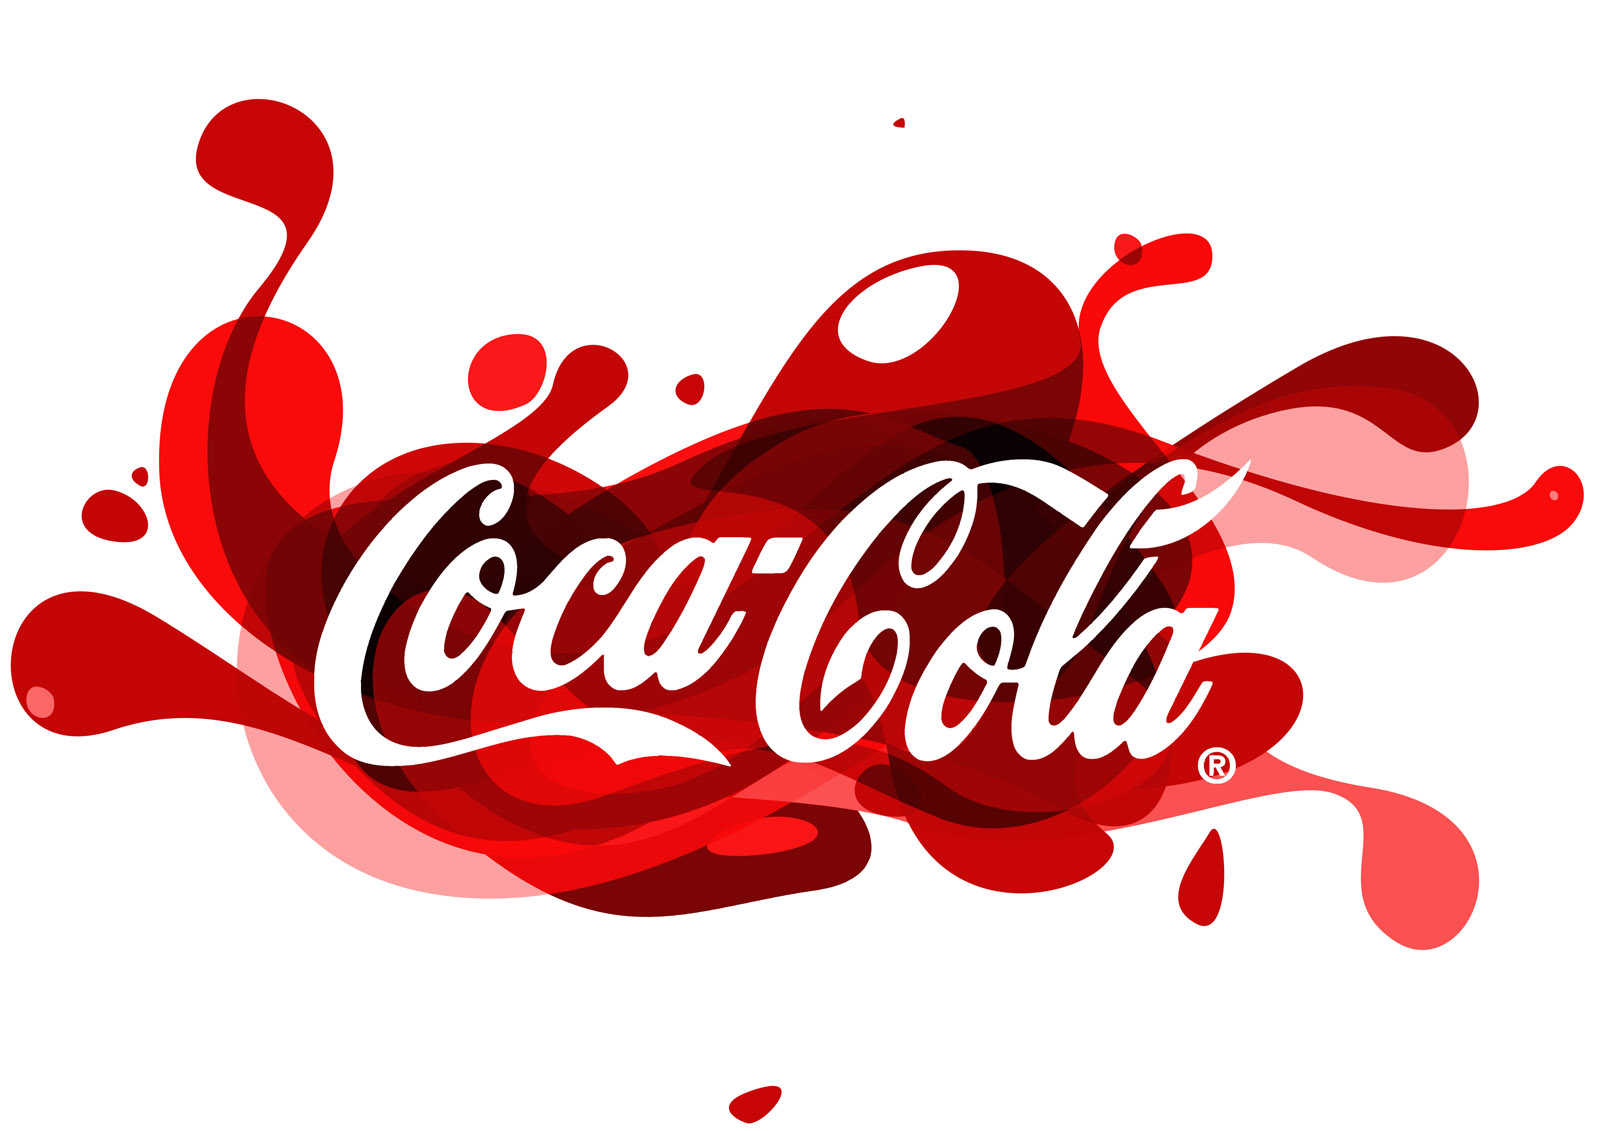 Coca Cola backgrounds